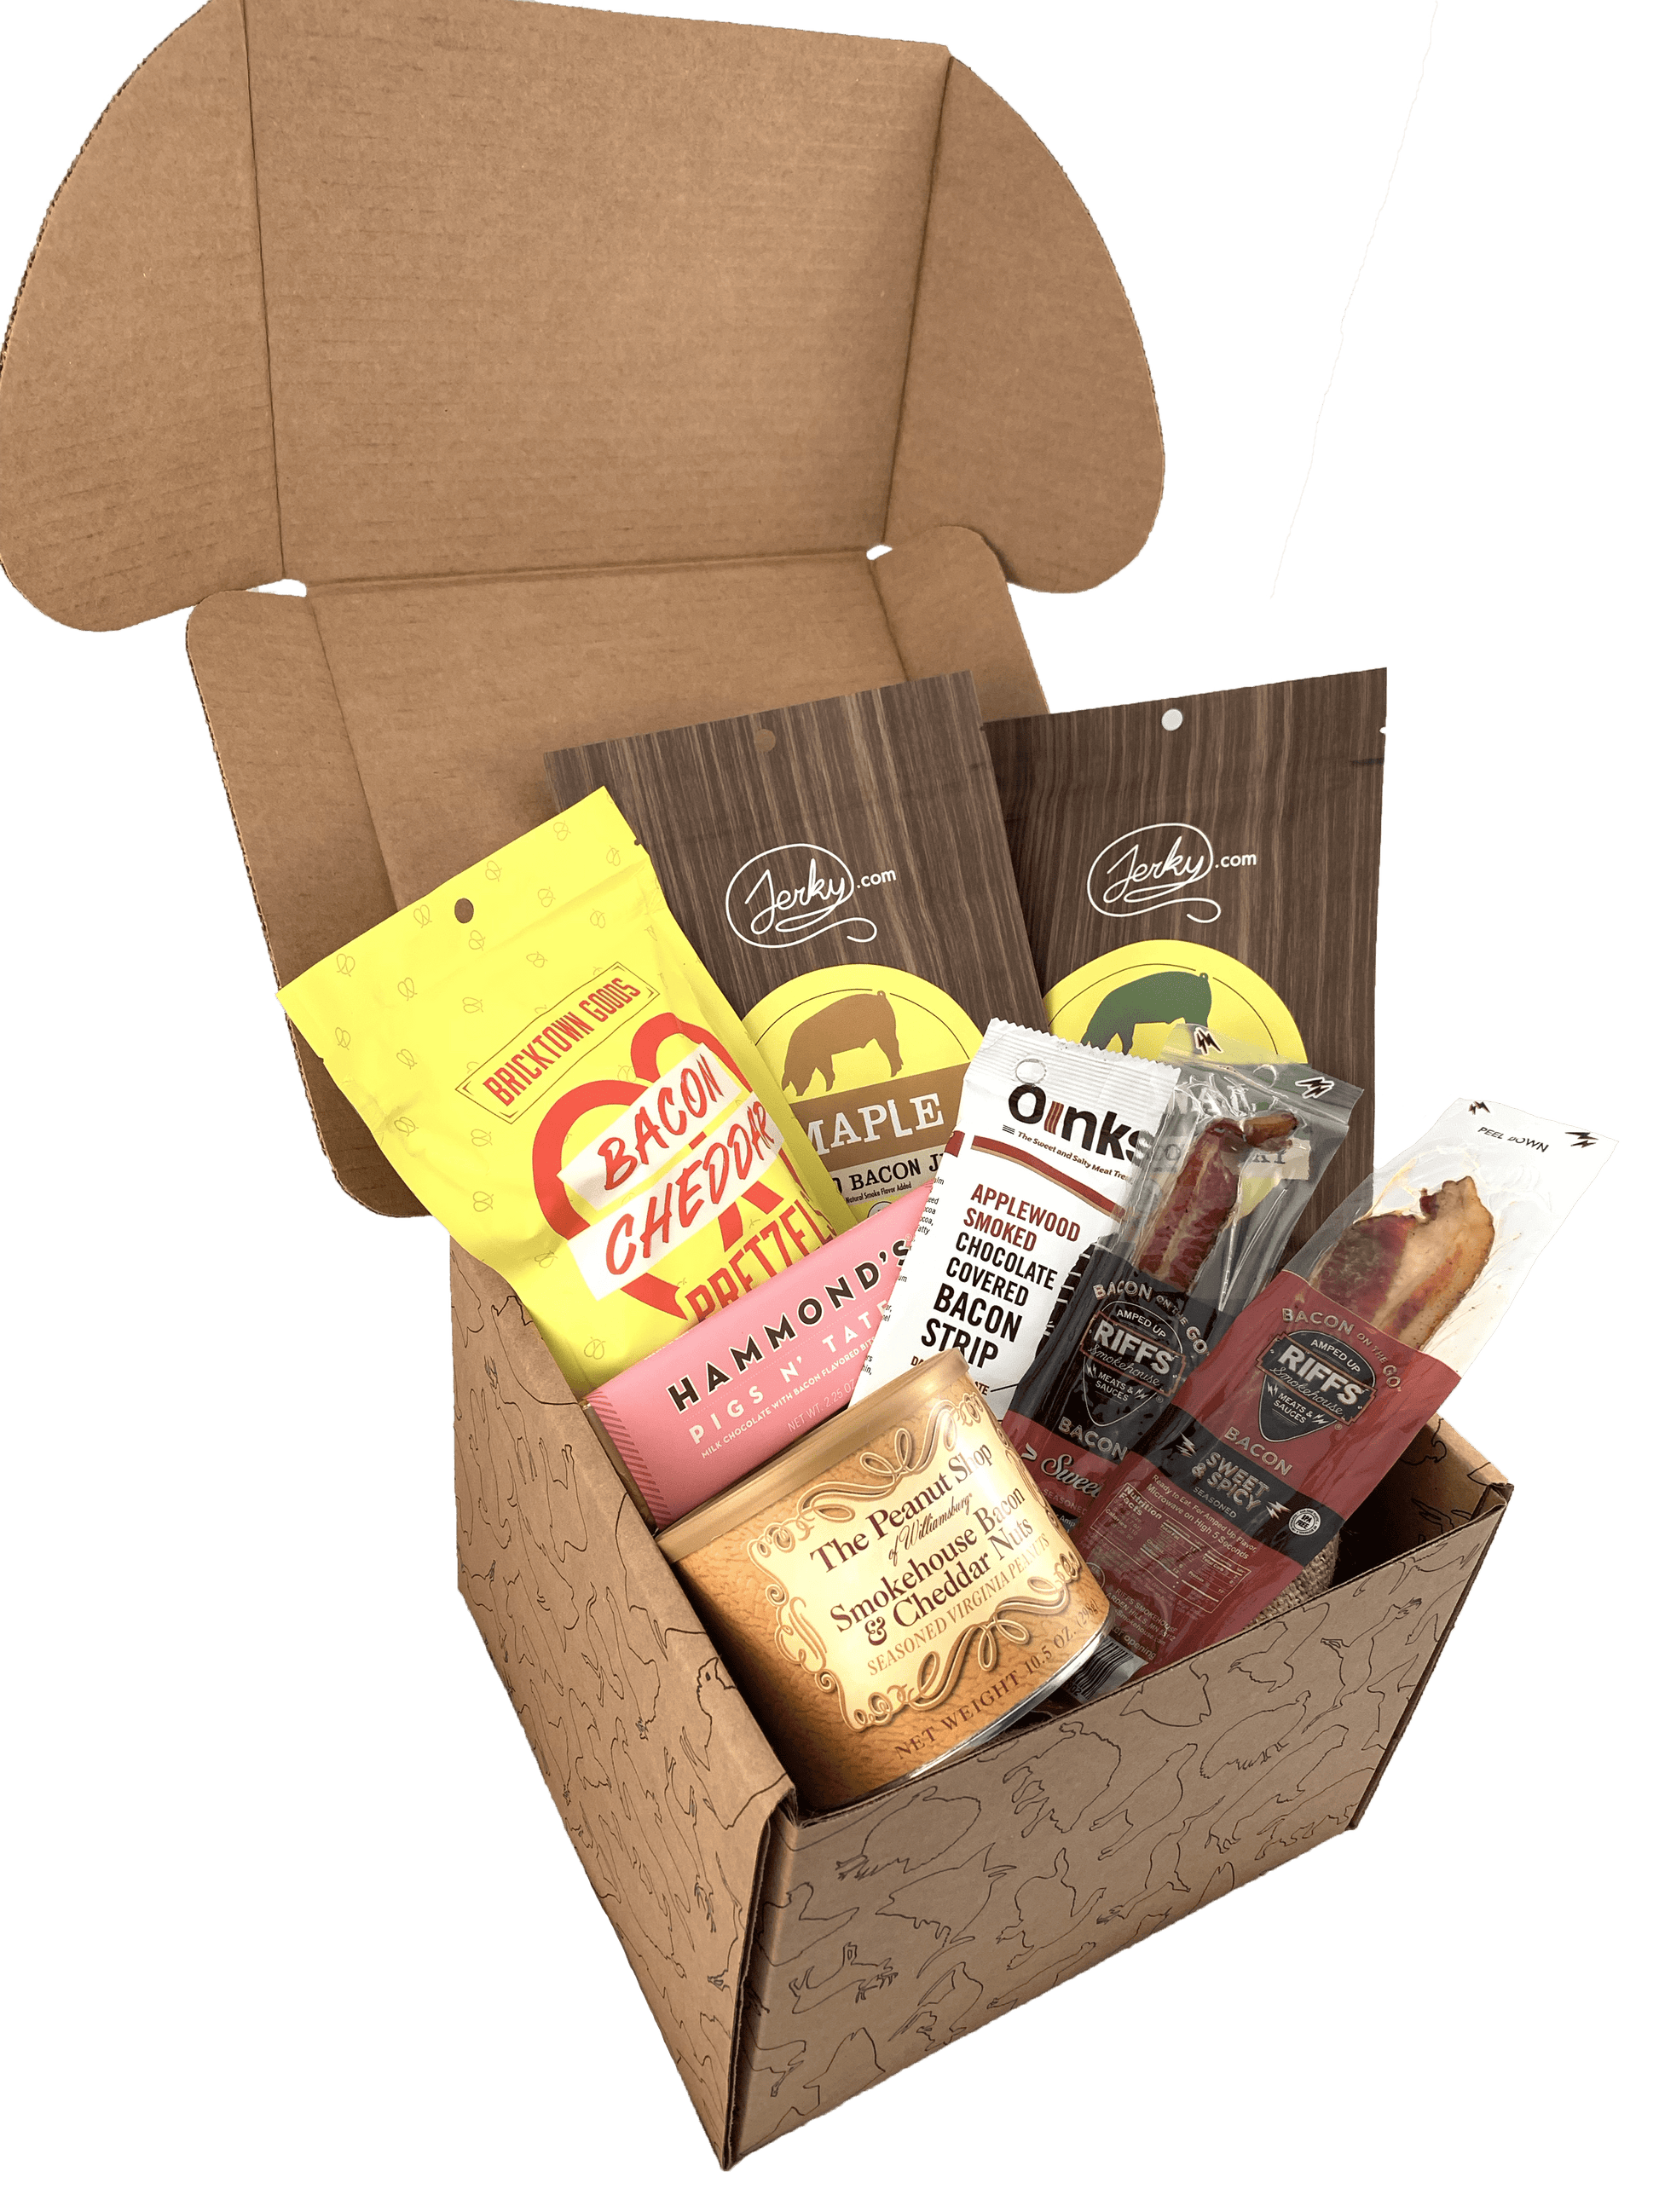 Bacon Lover's Gift Box by Jerky.com